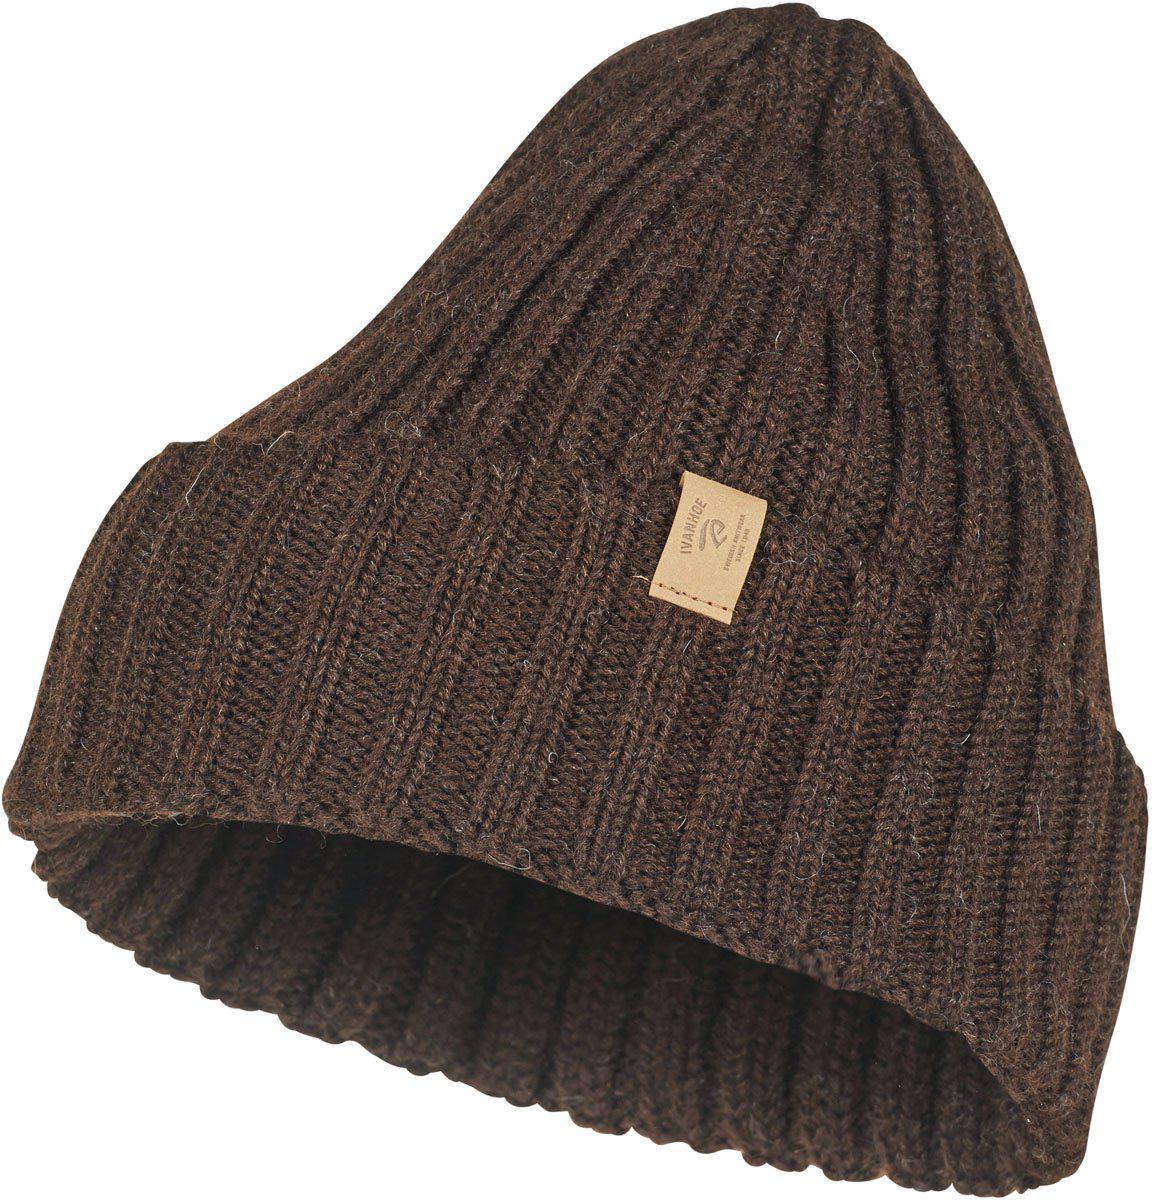 Ivanhoe NLS Rib Hat